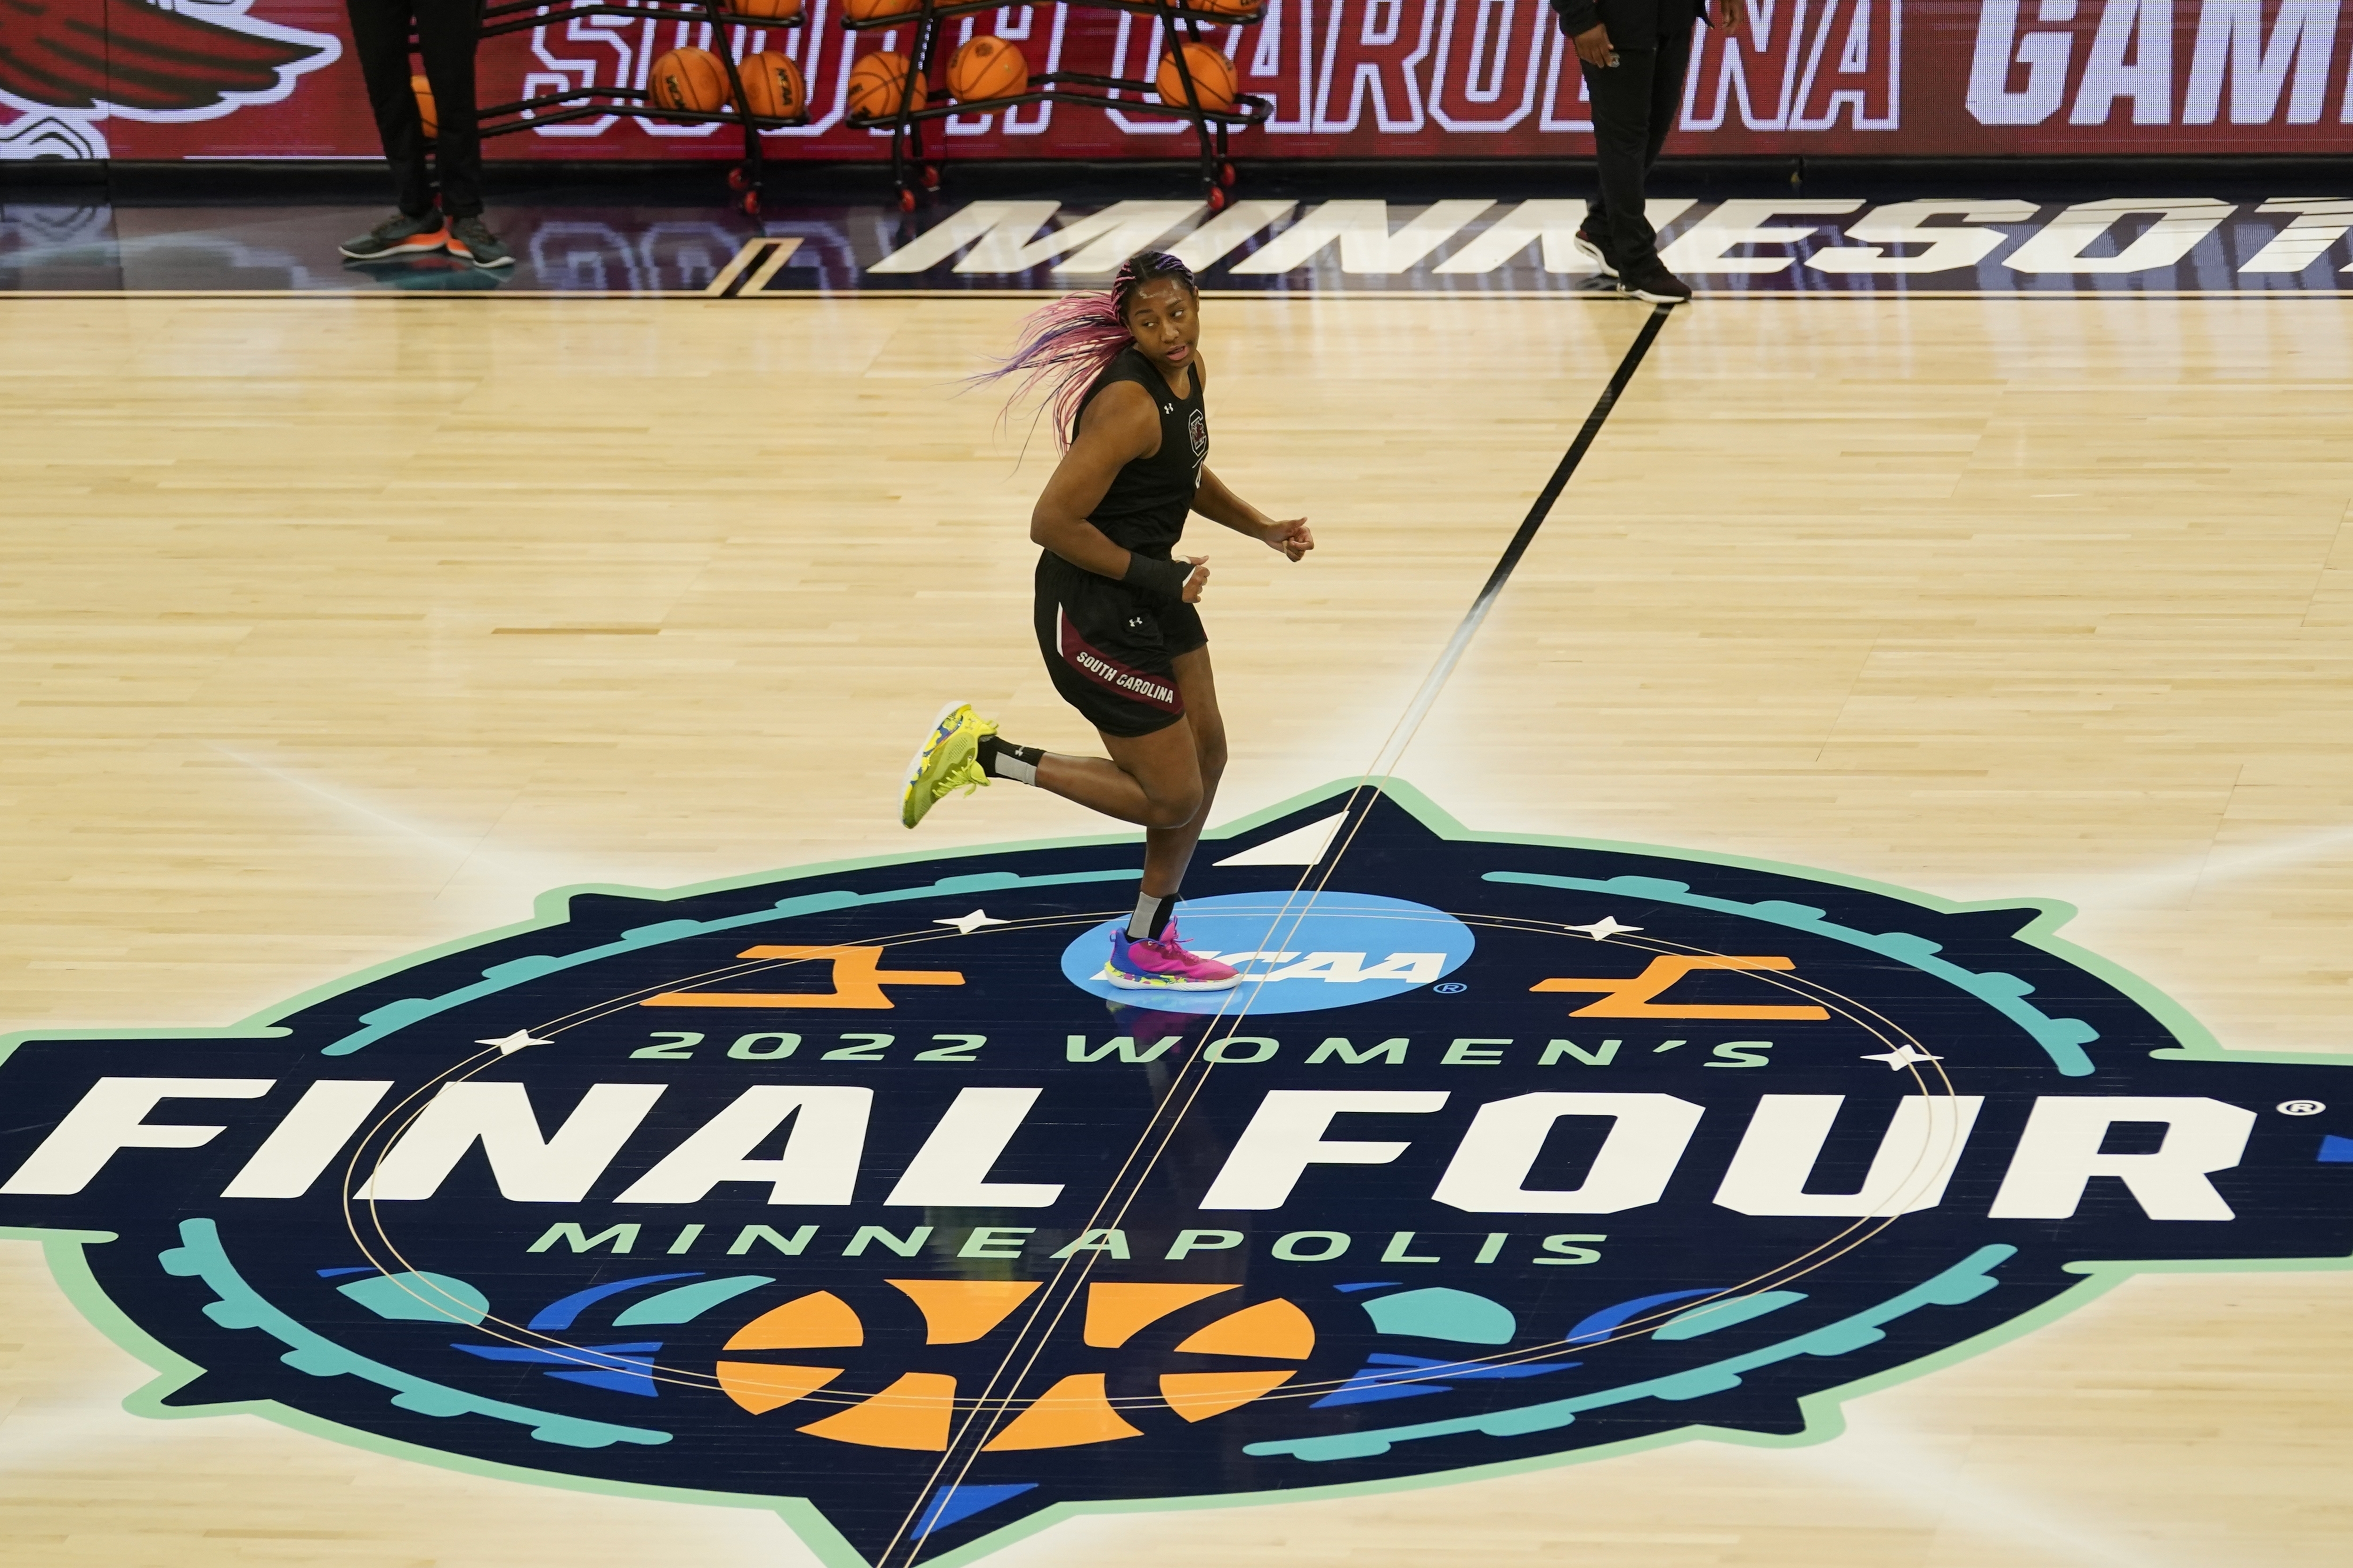 Boston, South Carolina advance to reach Final Four